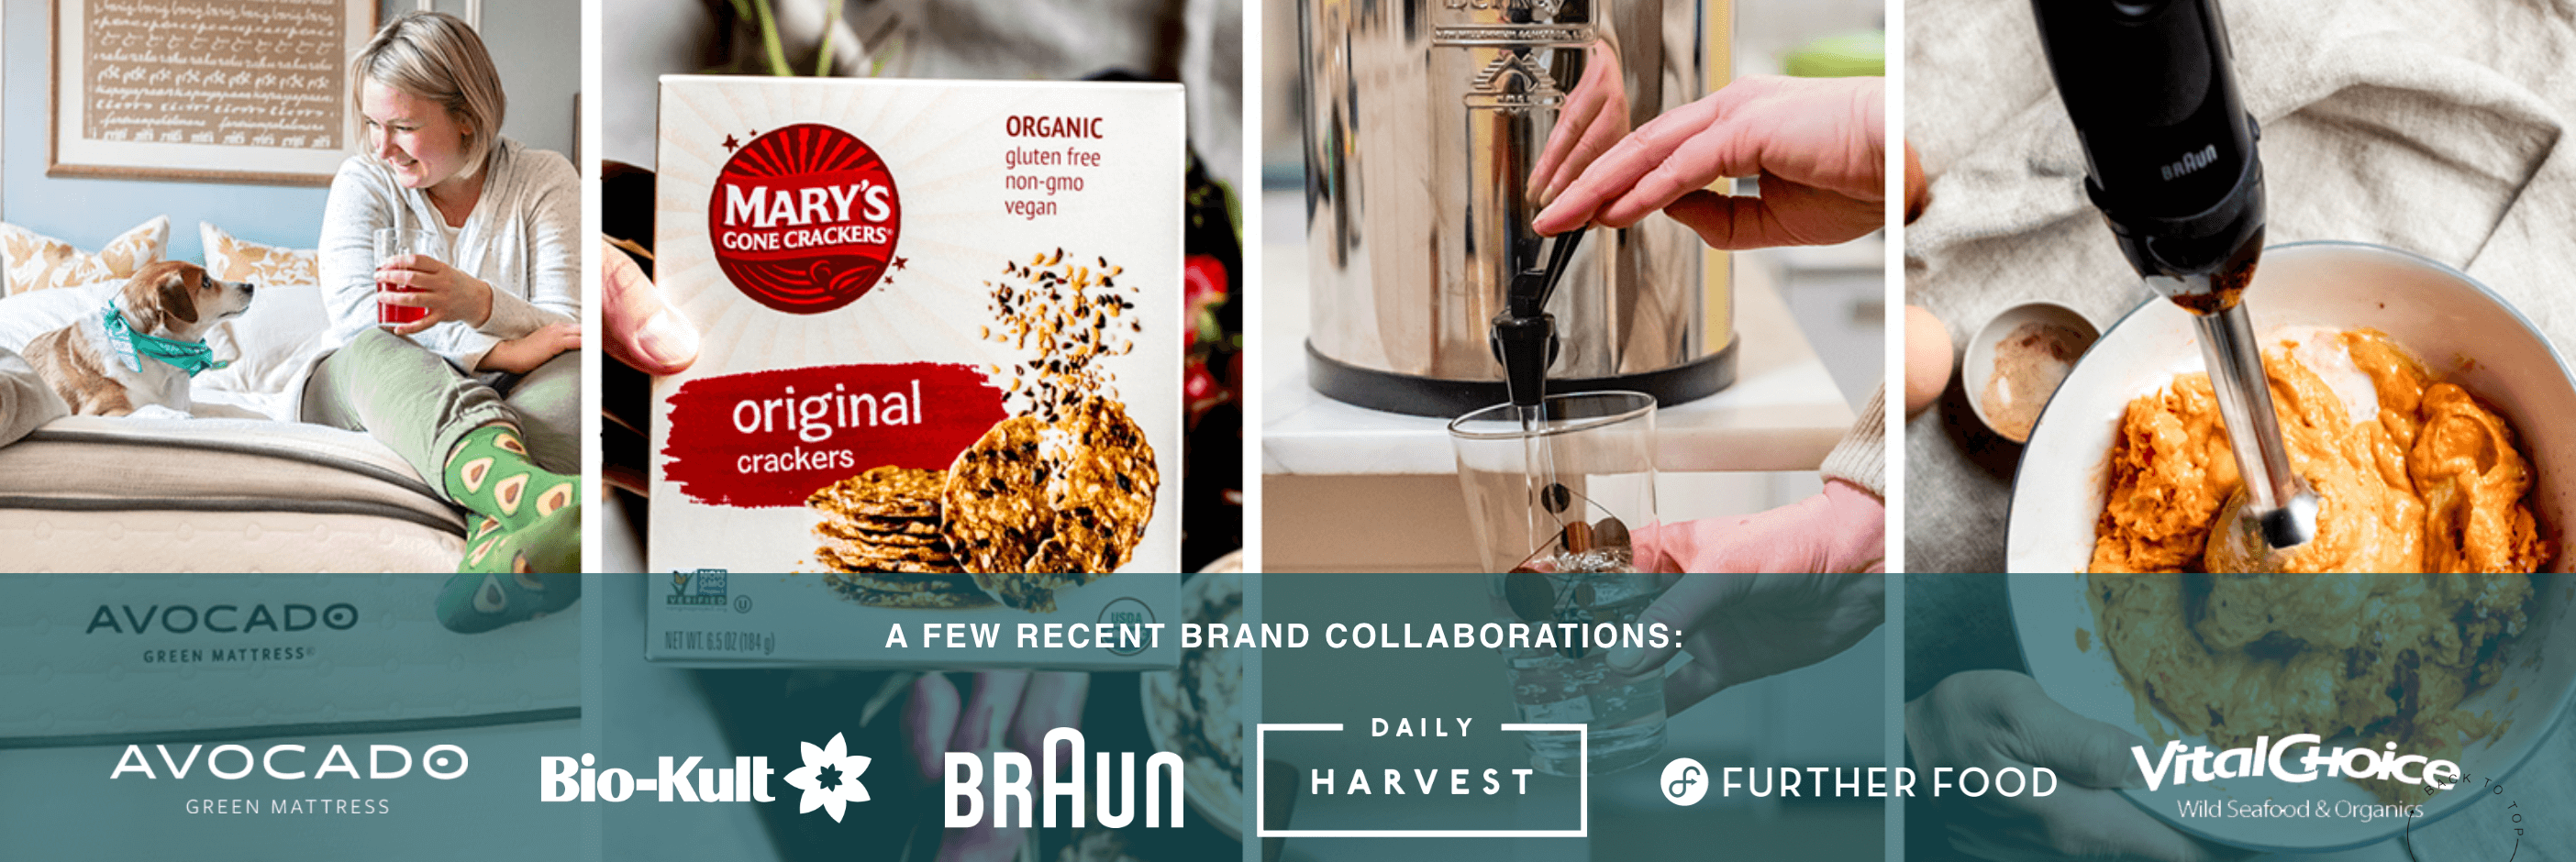 Brand partnerships abra pappa/ abra's kitchen